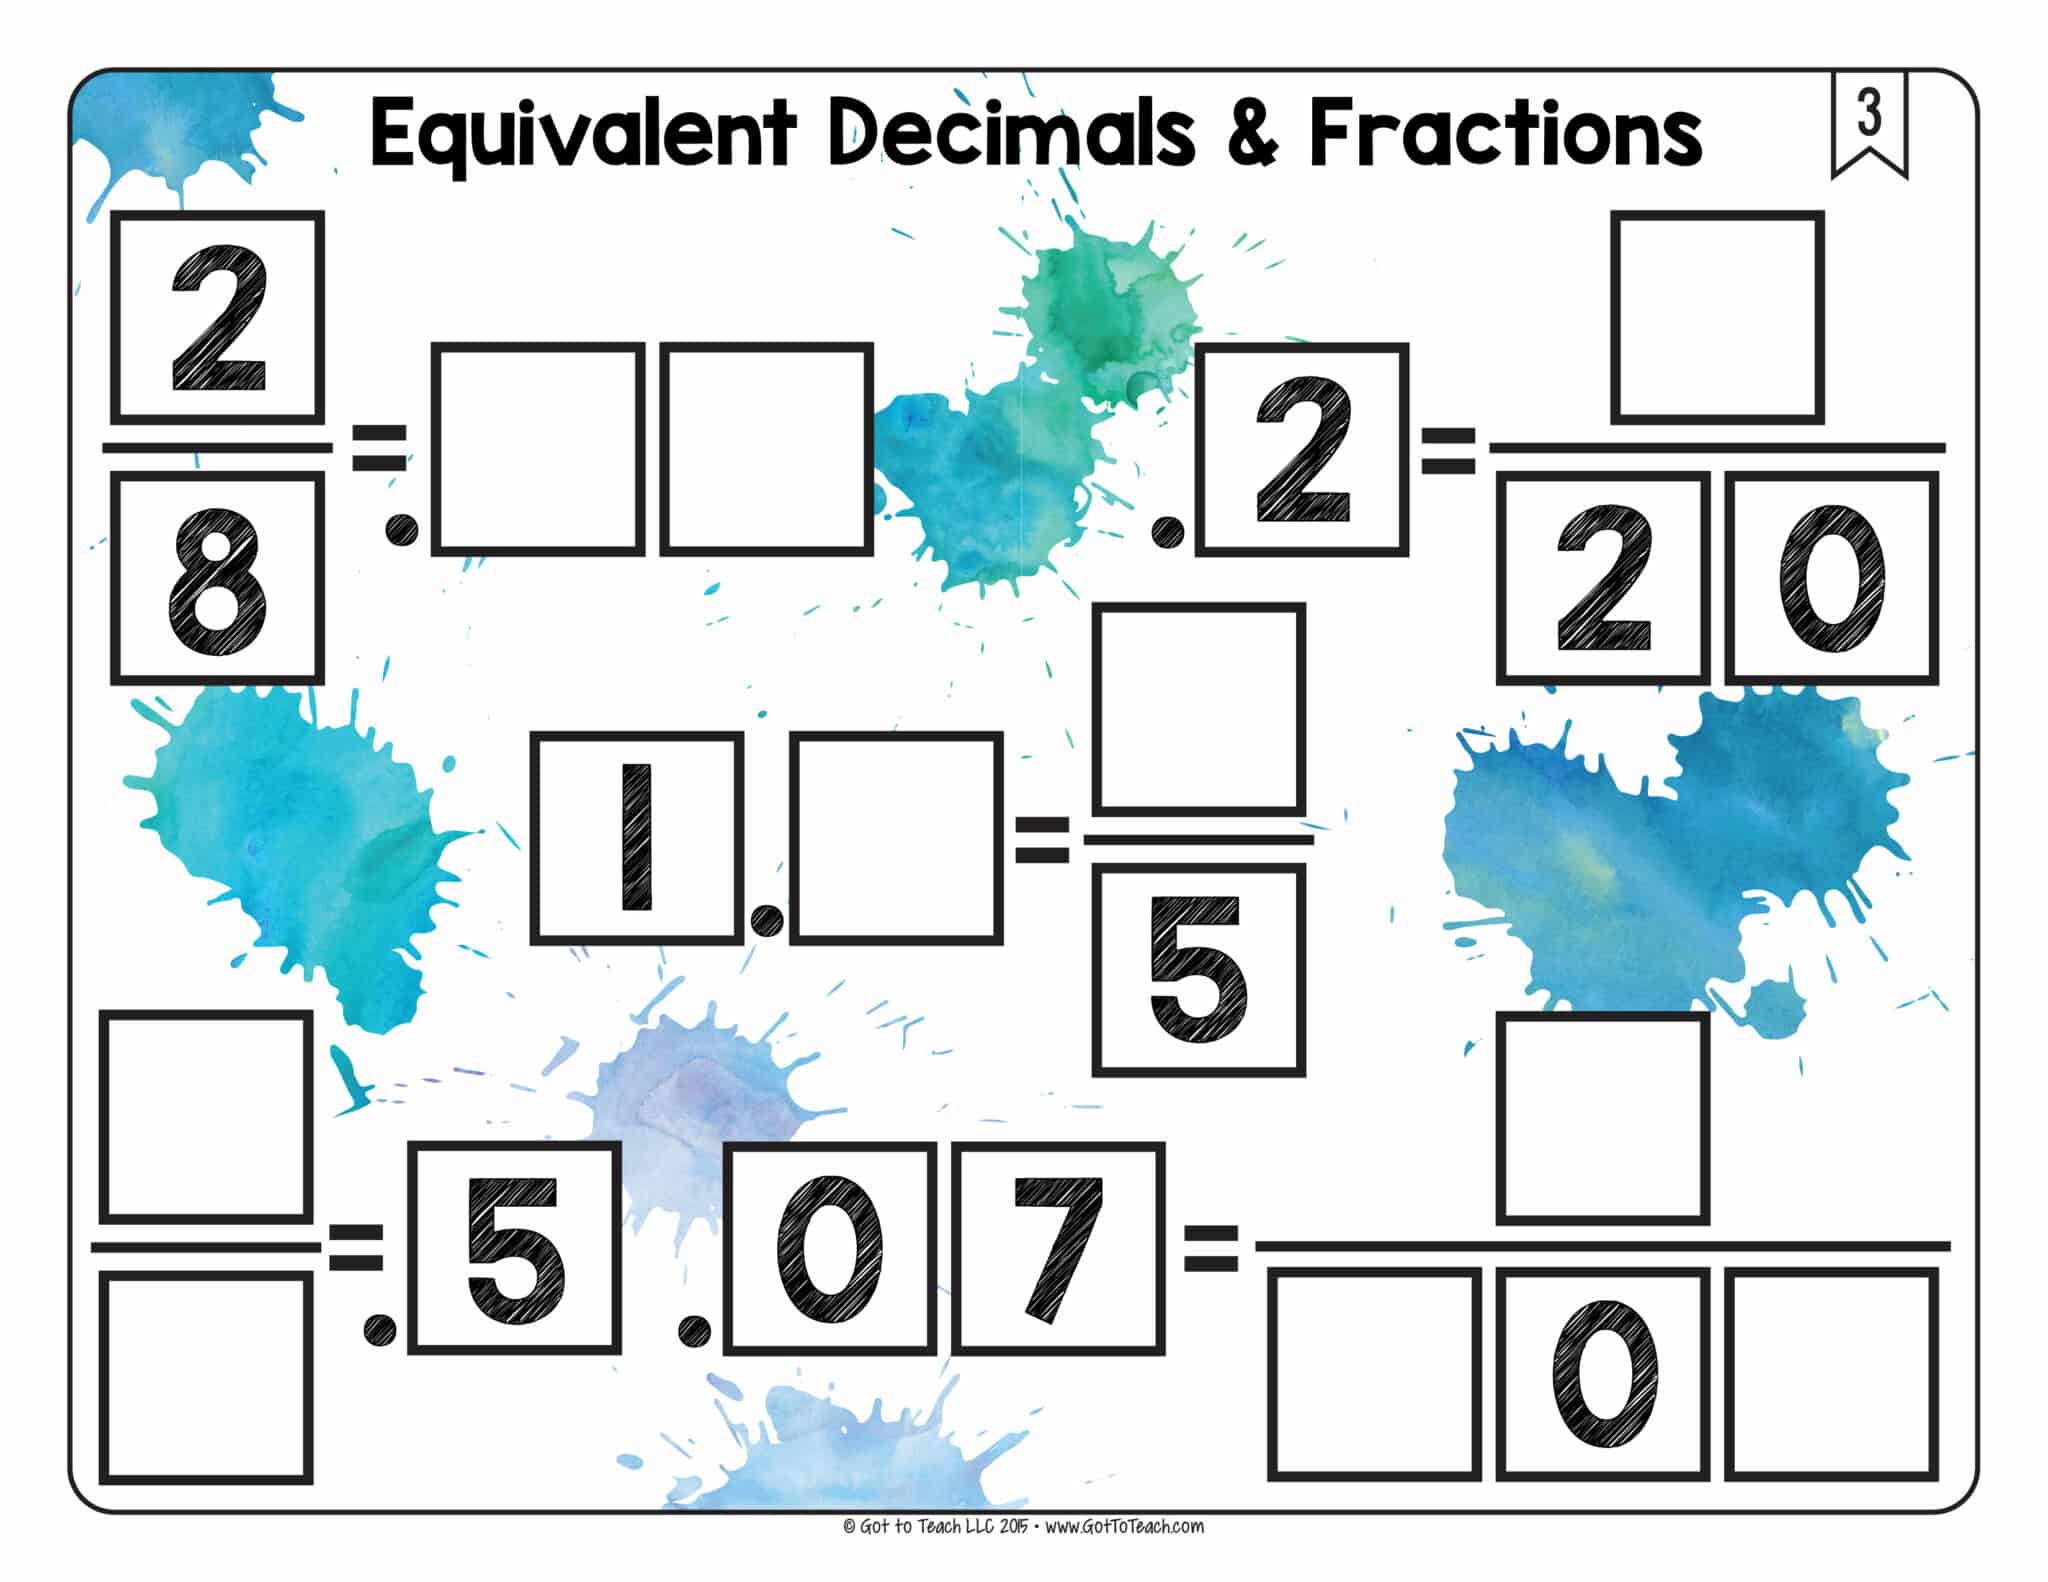 Equivalent Decimals and Fractions